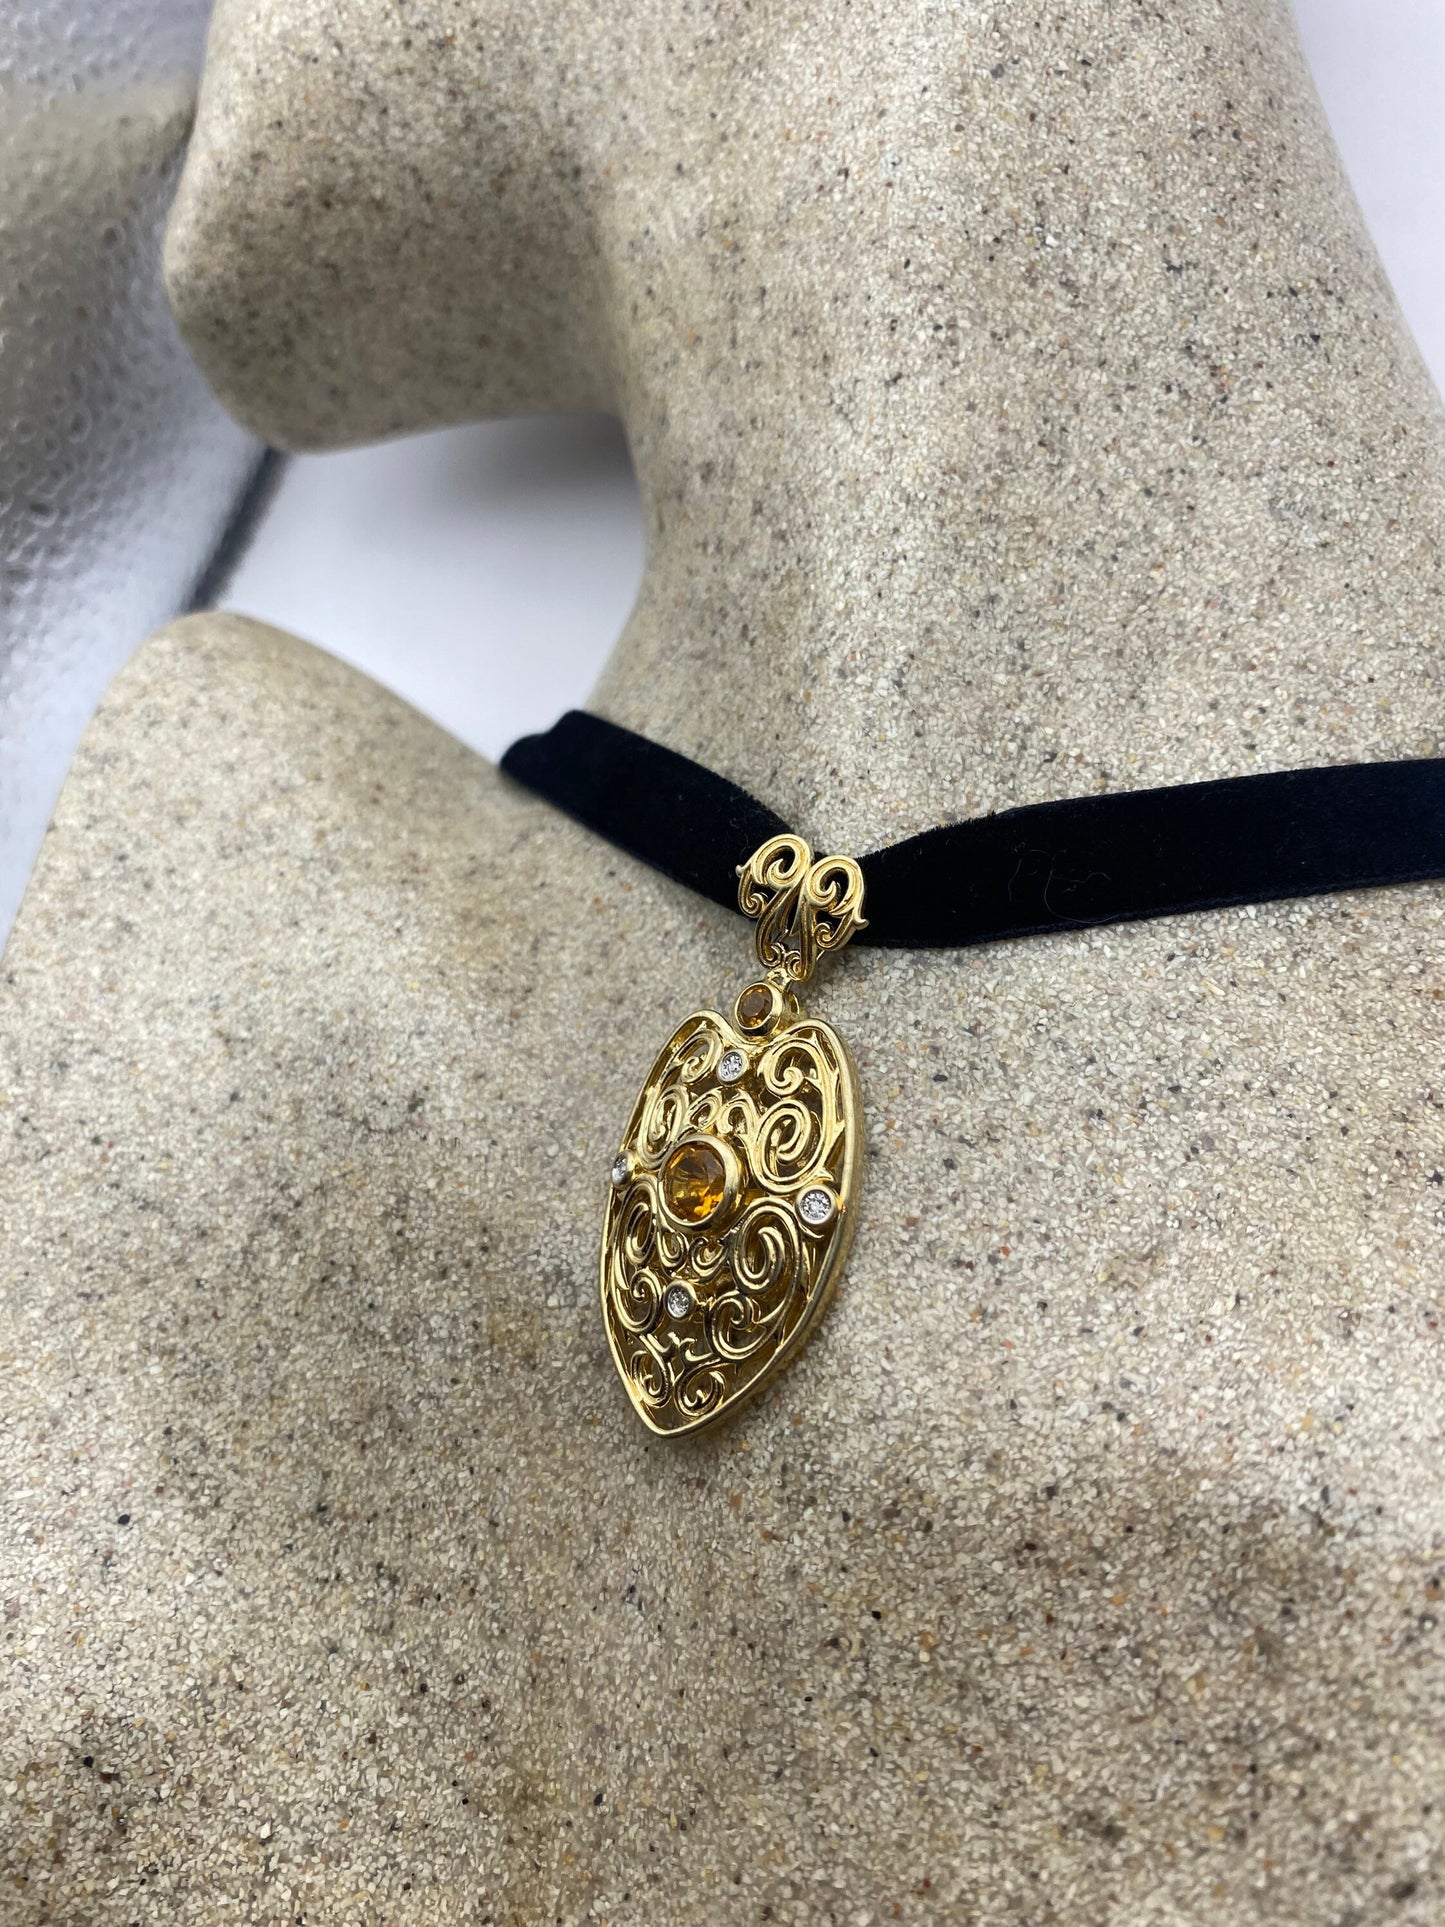 Vintage Gold Pendant | Hungarian Genuine Citrine Gemstone Pendant | Golden 925 Sterling Silver Ribbon Choker Necklace